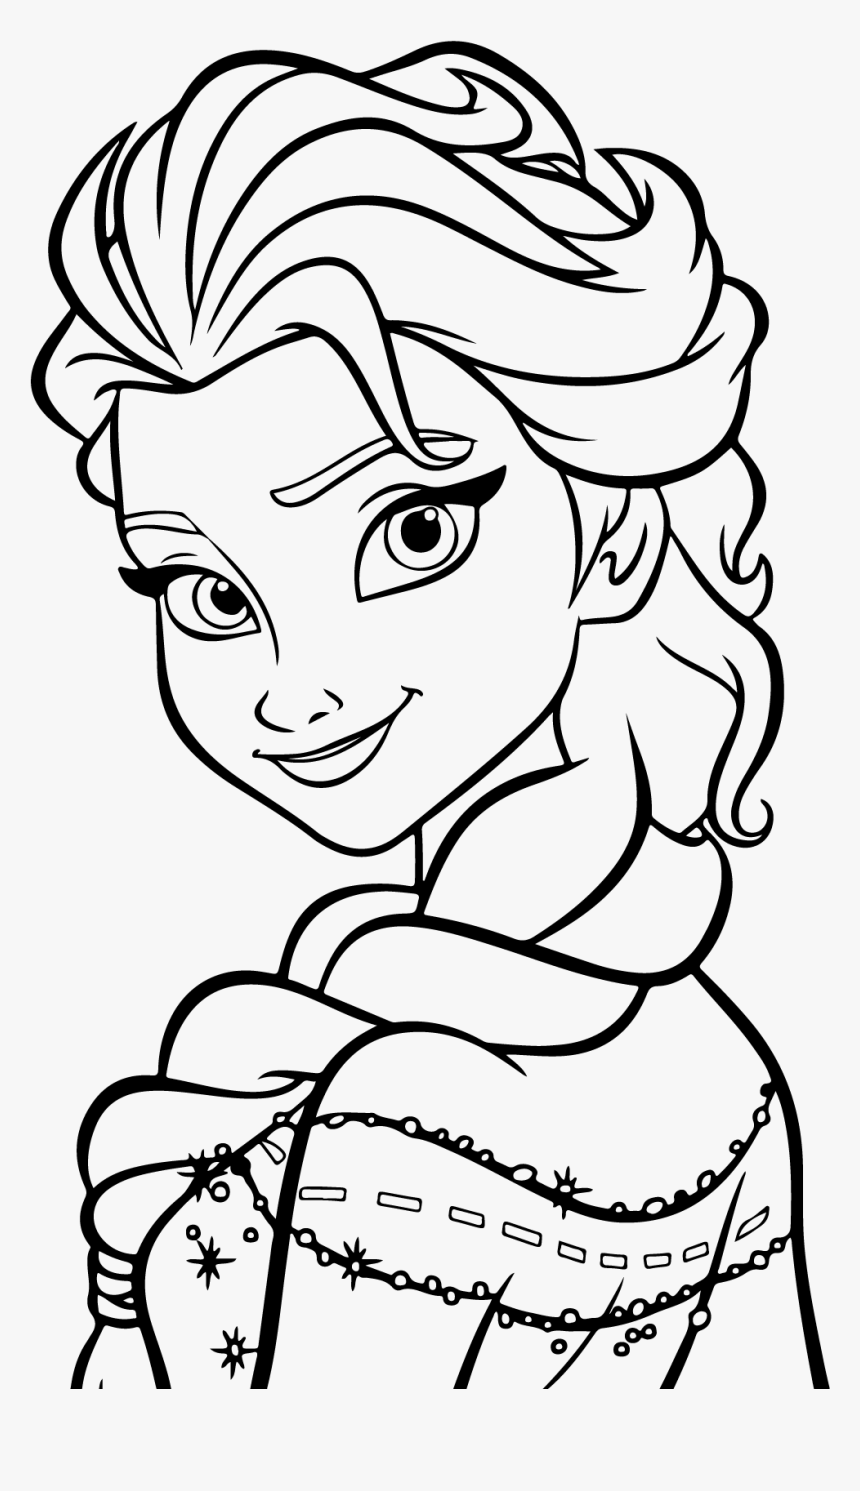 Download Disney Princess Frozen Elsa Coloring Page Printable ...